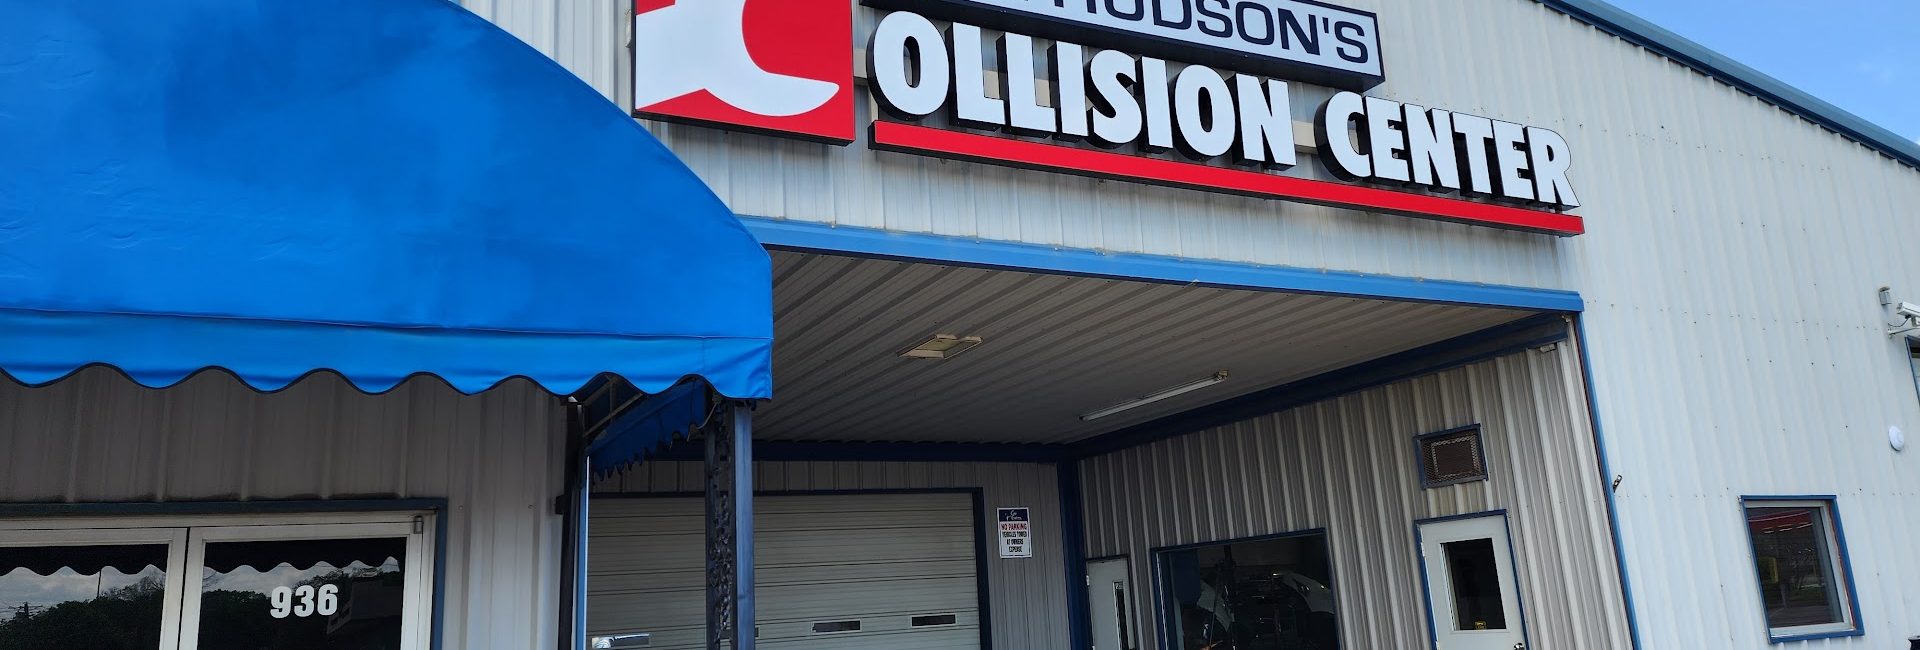 Joe Hudson’s Collision Center 6